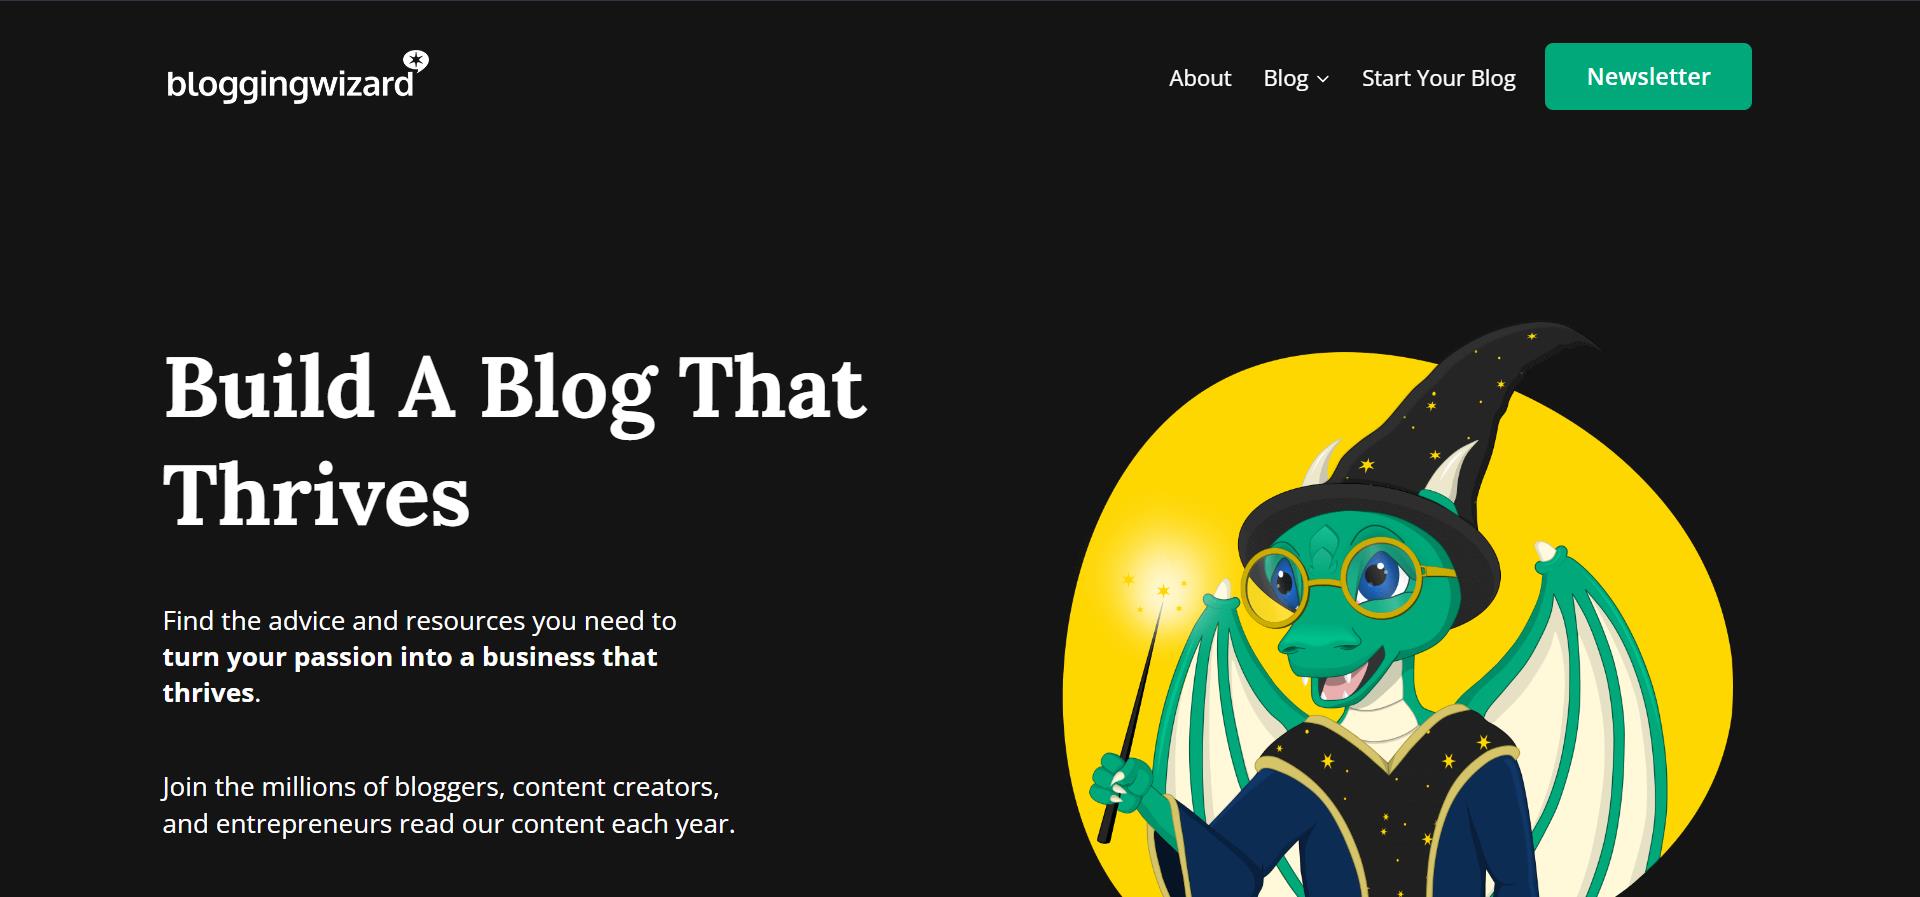 blogging wizard homepage